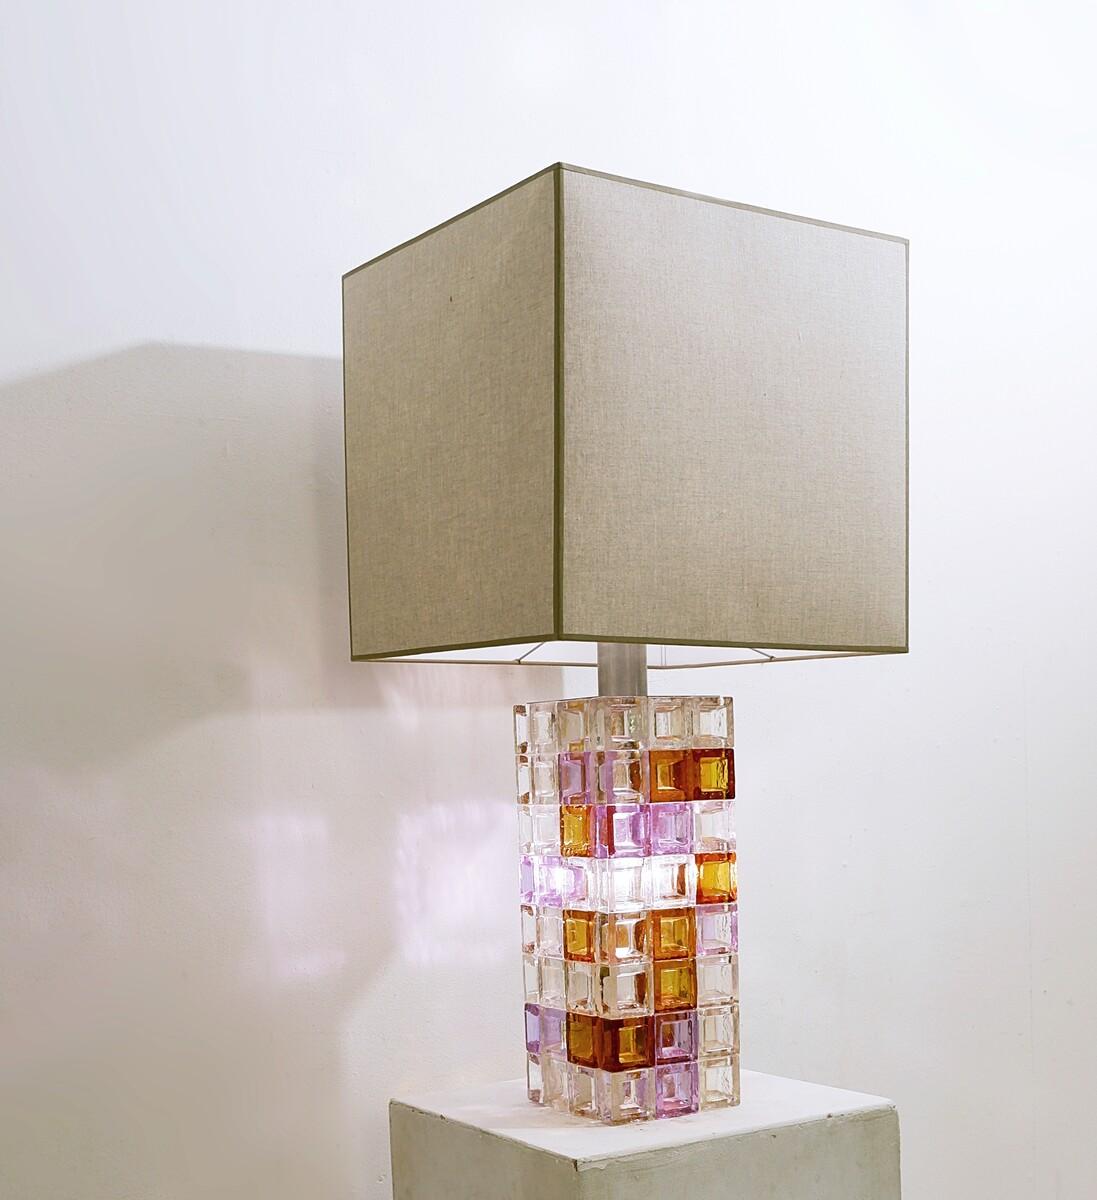 Mid-Century Modern Italian Murano Glass Table Lamp by Albano Poli for Poliarte - 1960s.